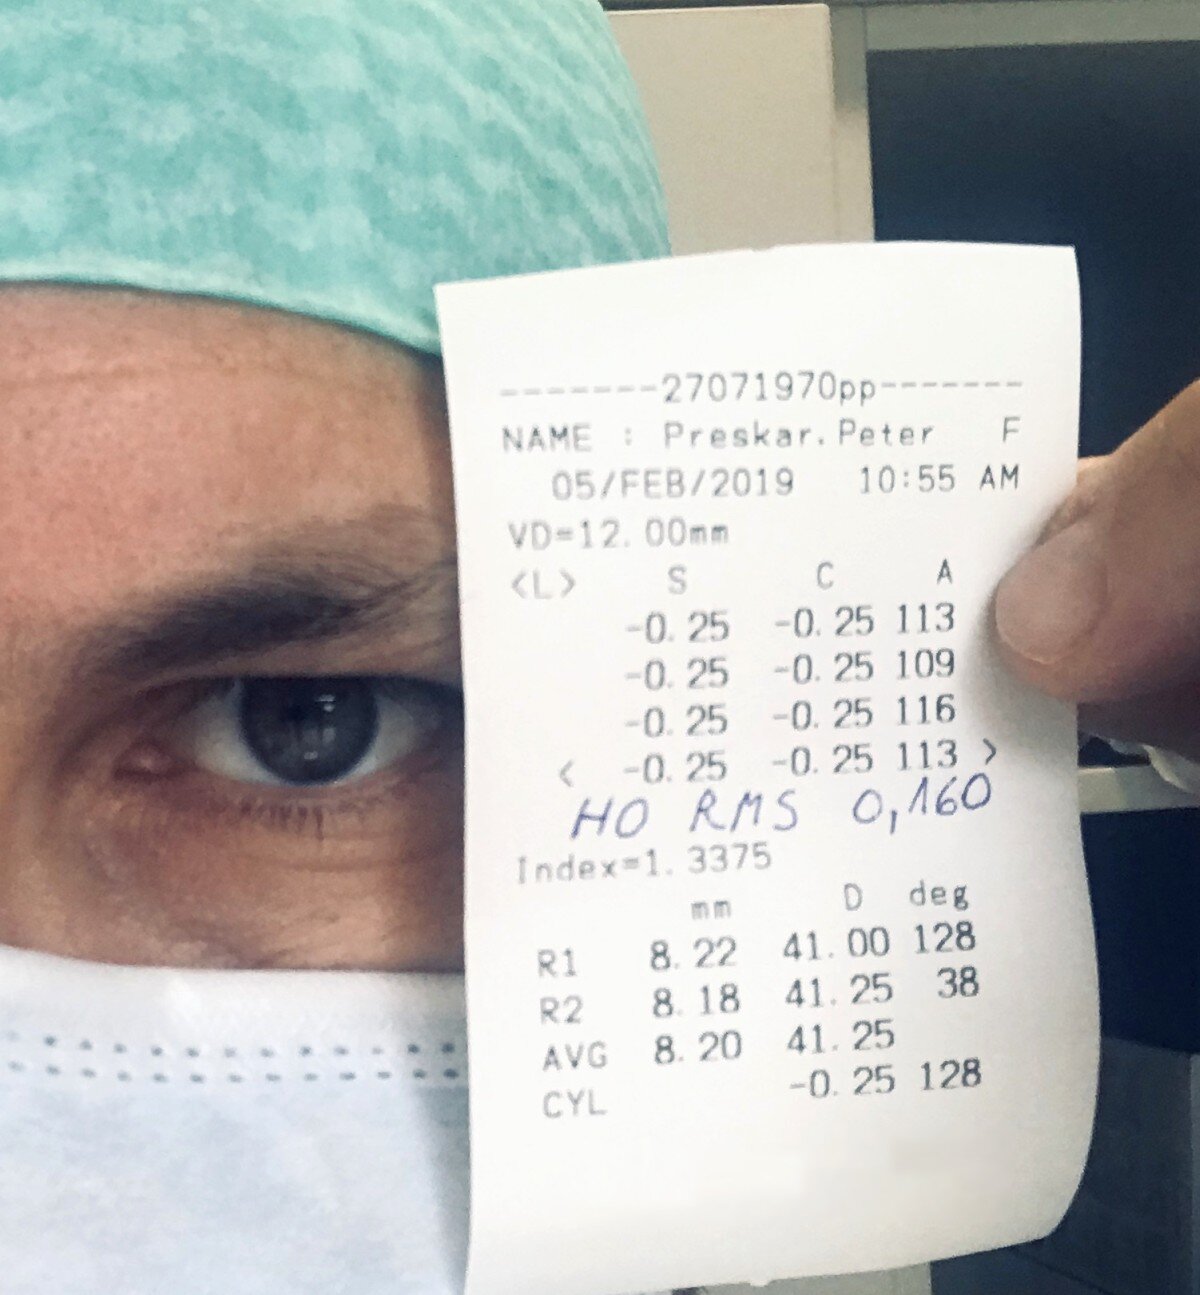 Dr. Peter Preskar with the result of his AMARIS eye laser treatment